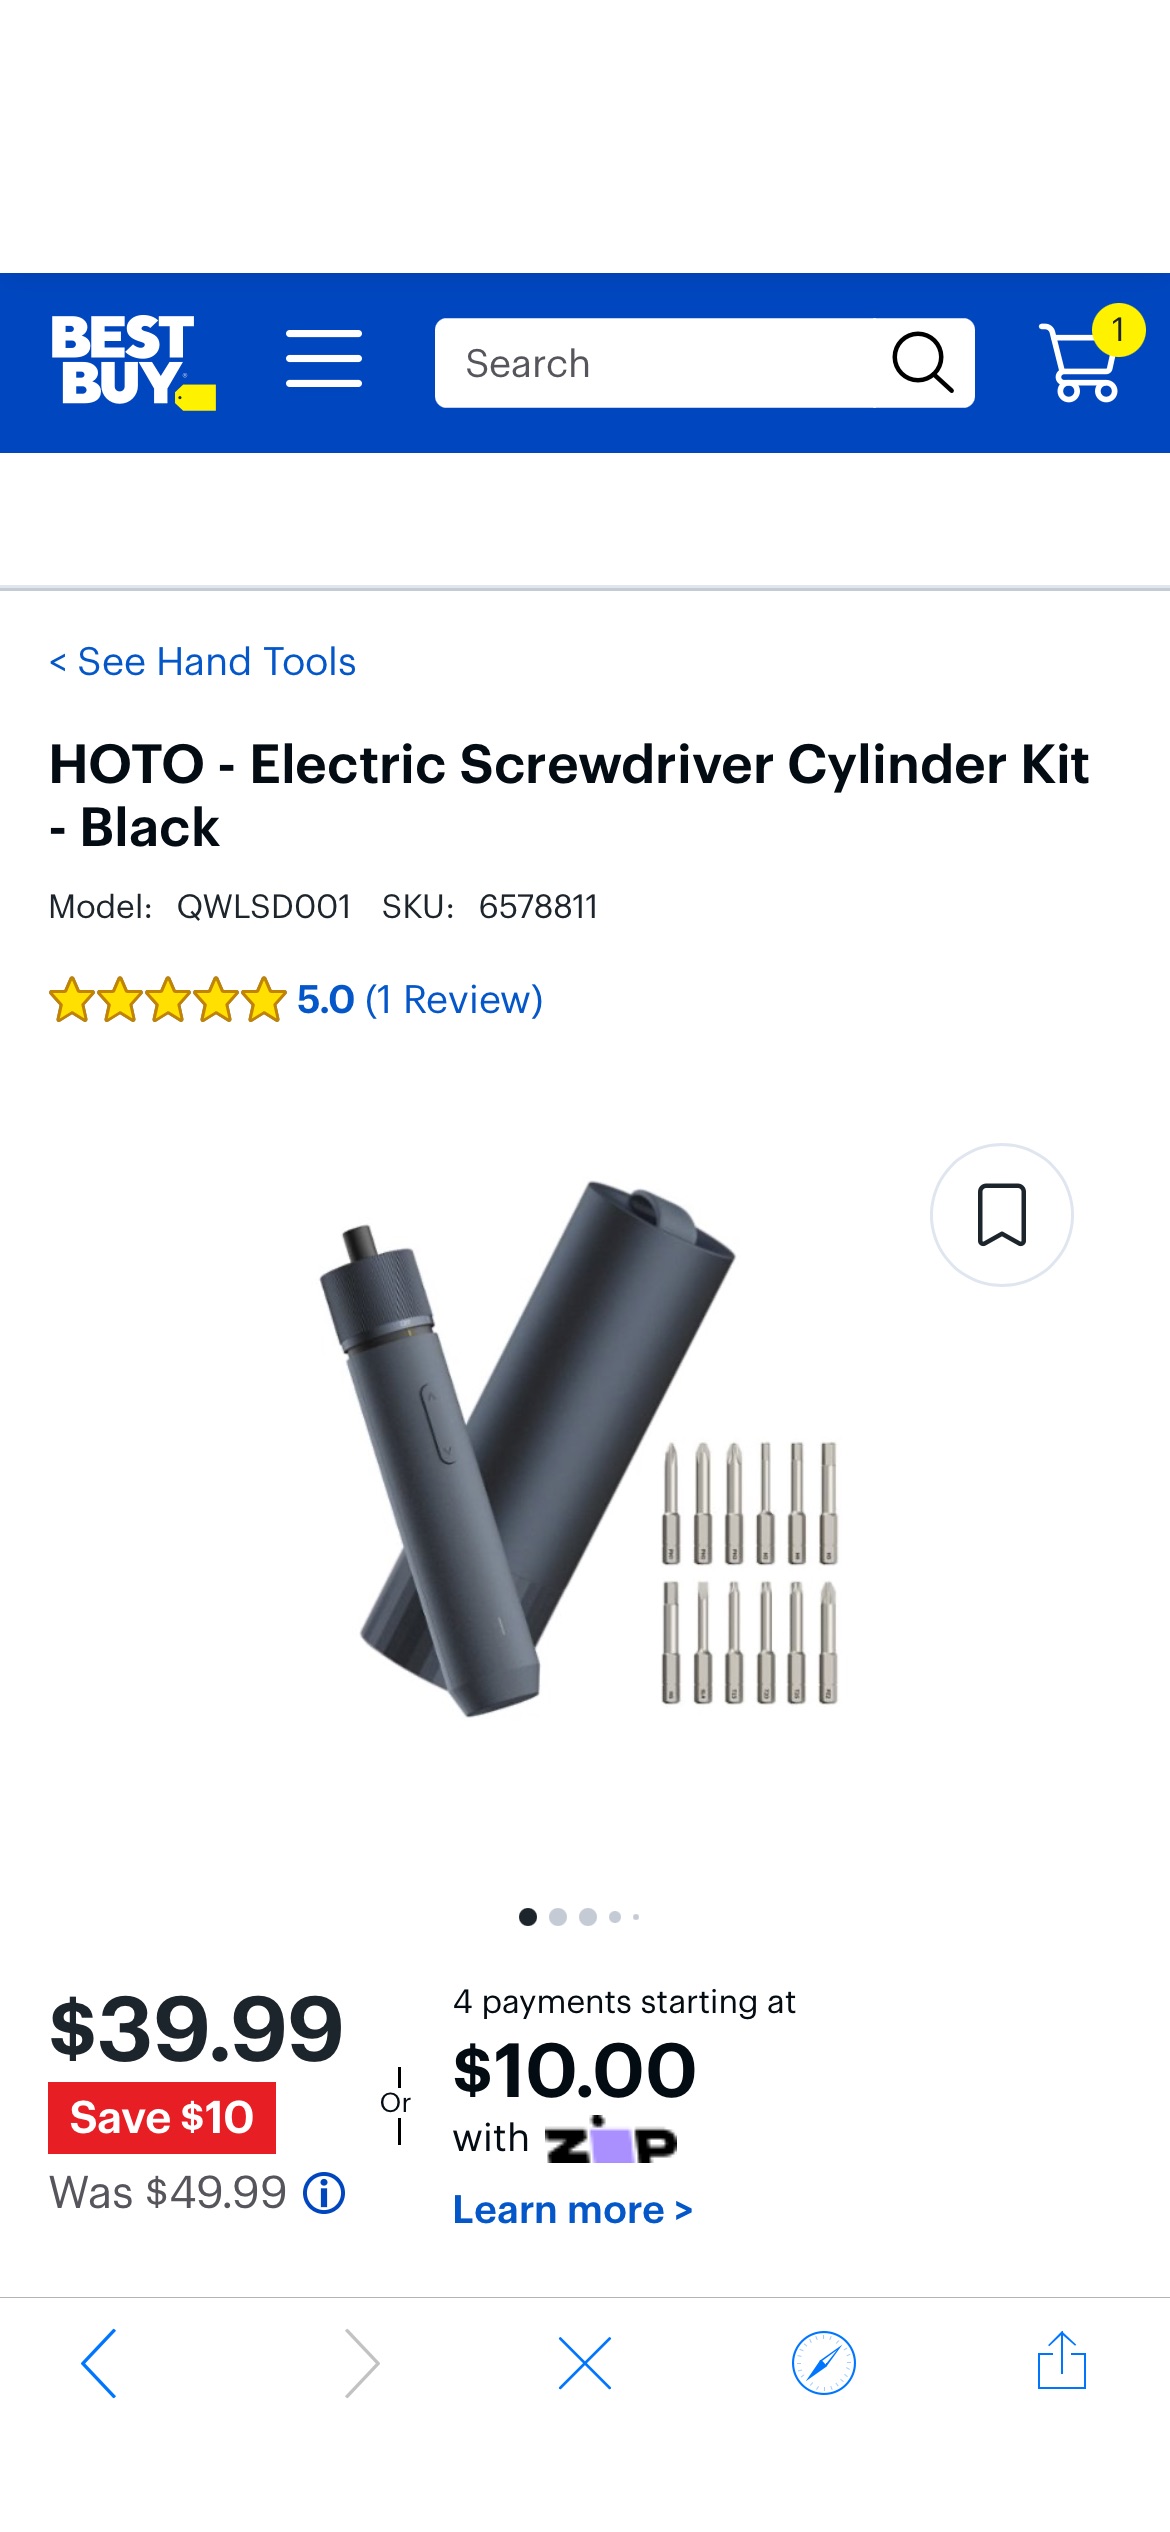 HOTO Electric Screwdriver Cylinder Kit Black QWLSD001 - Best Buy